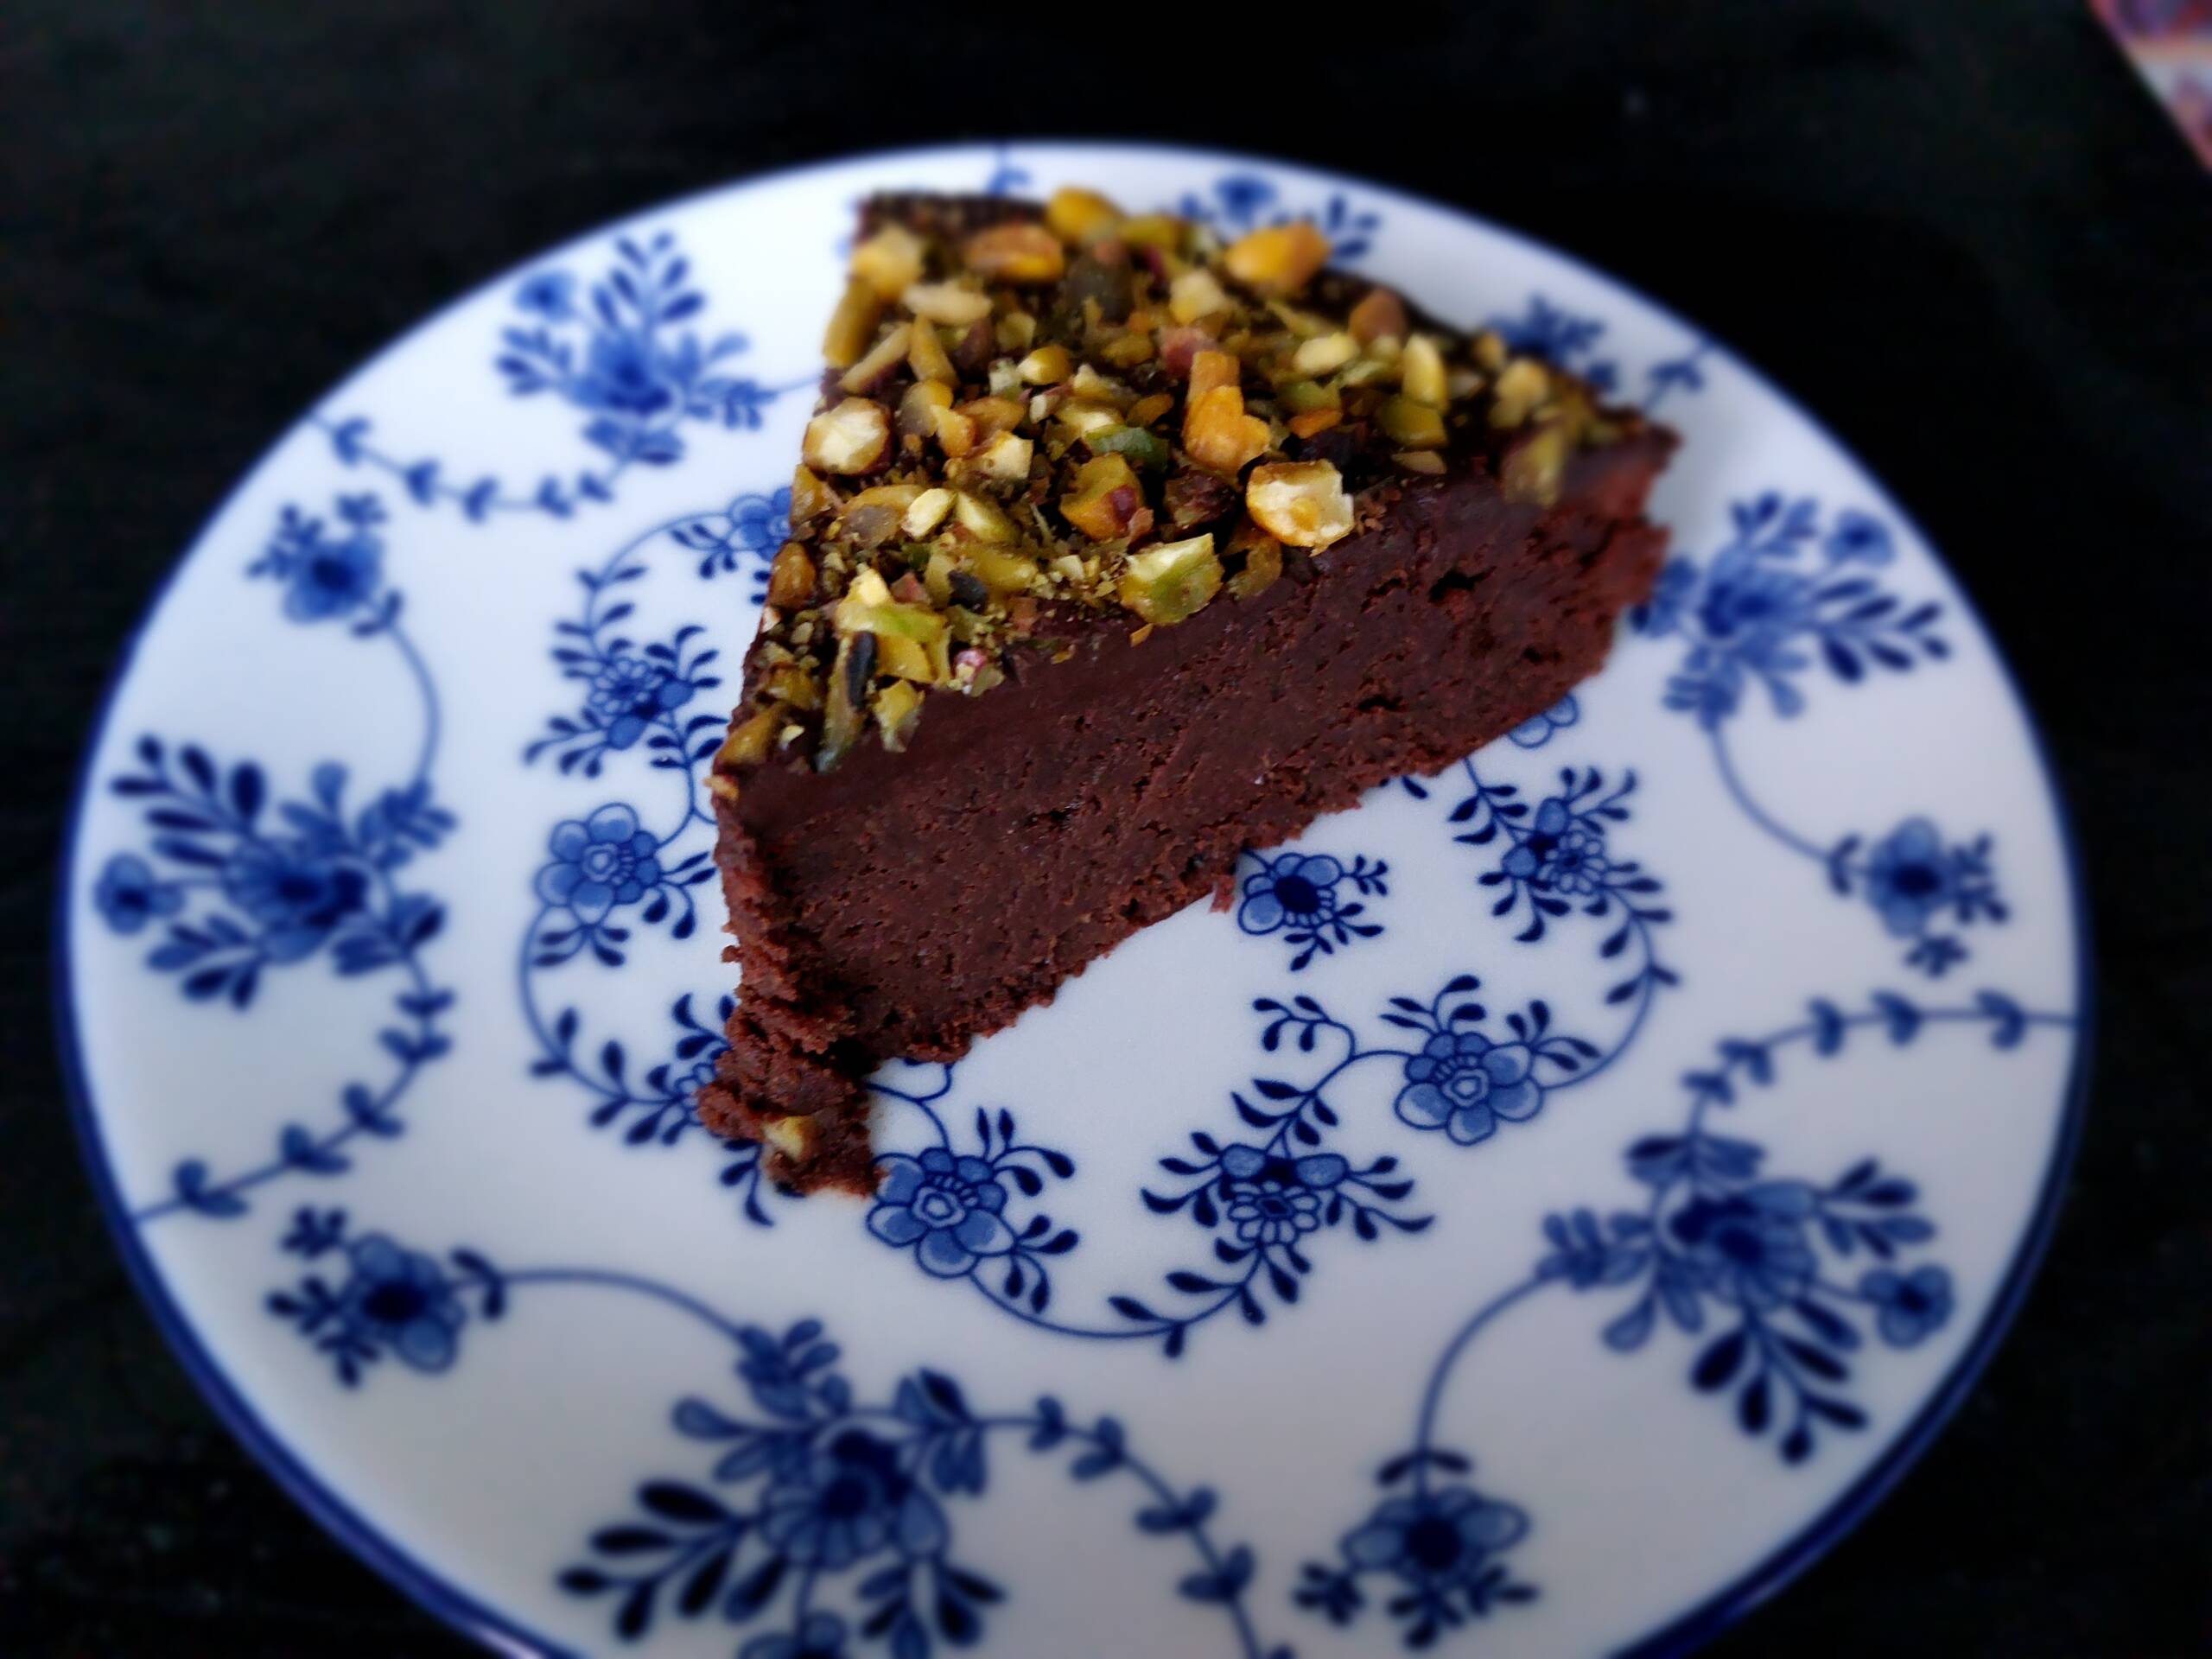 Torta Caprese: A Decadent Chocolate Almond Cake